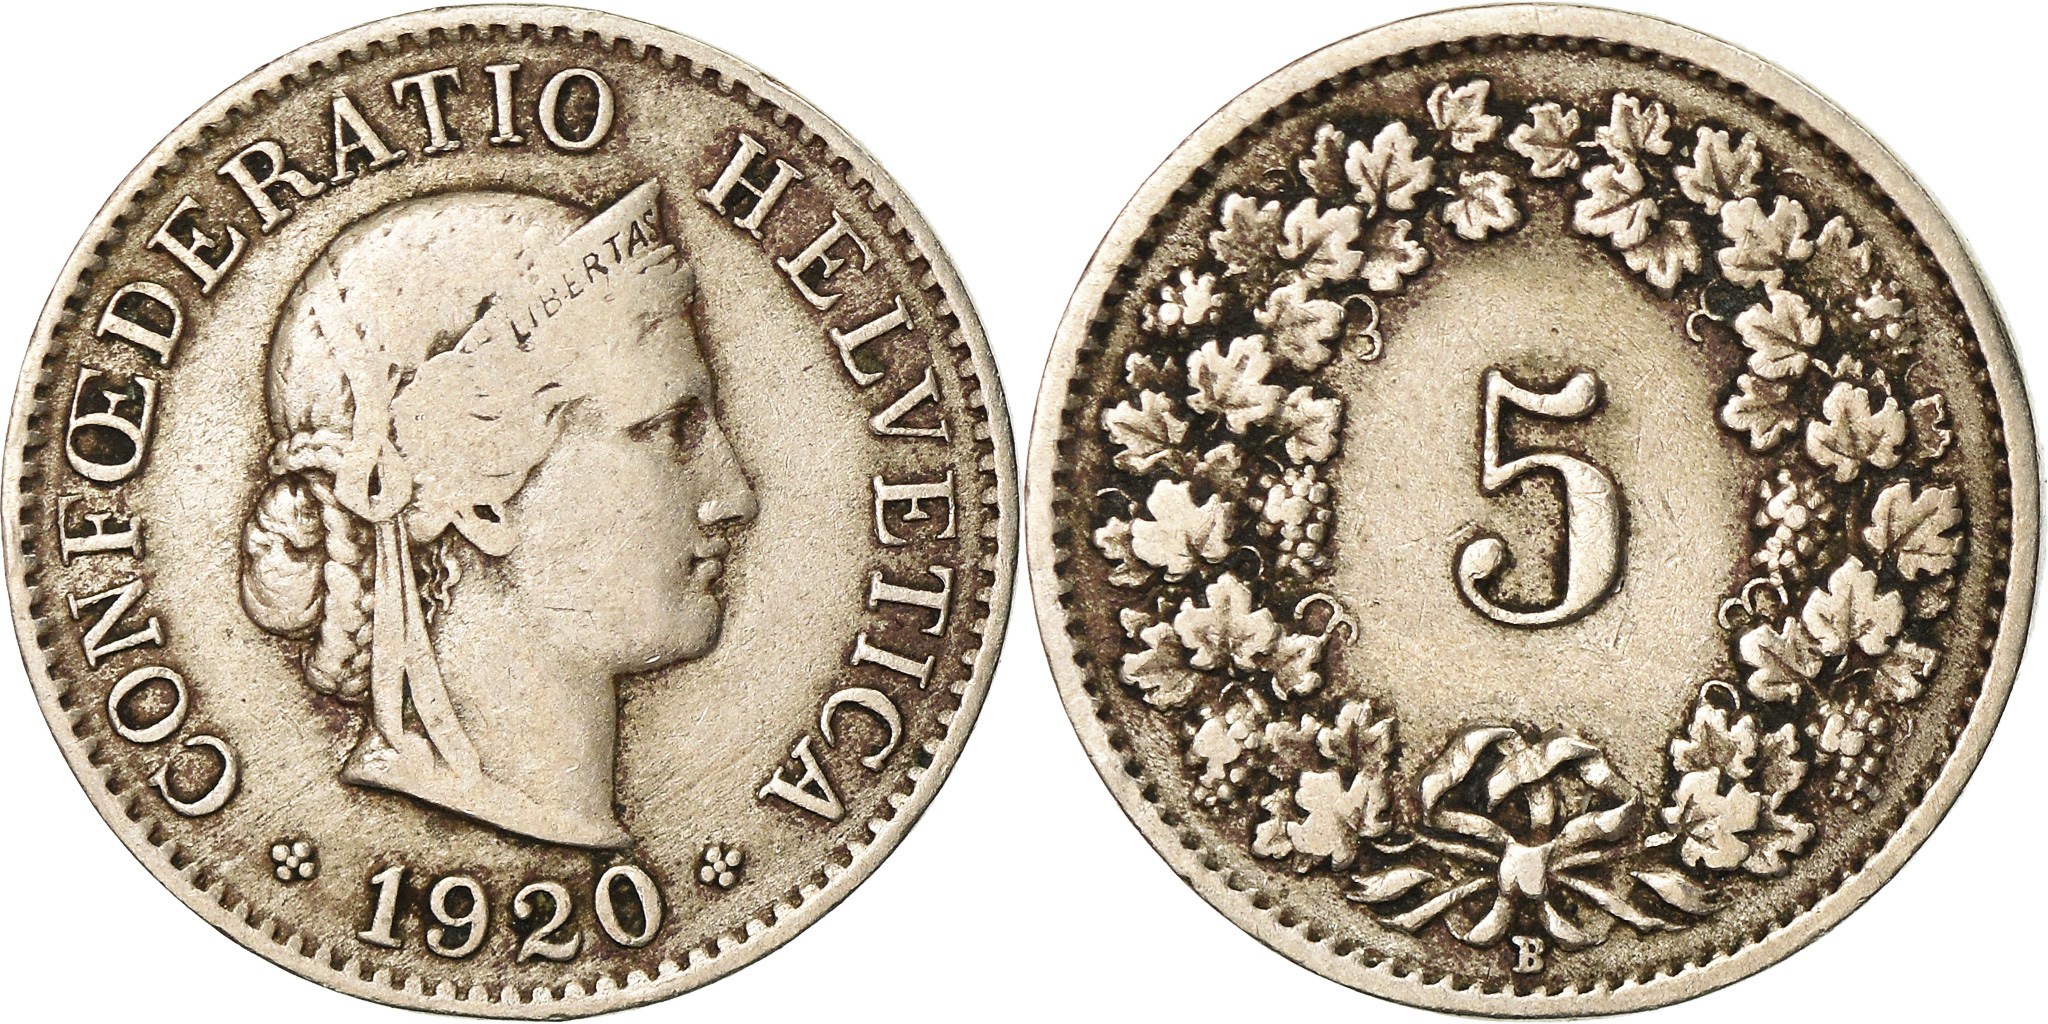 + + + Switzerland Conf Deratio Helvetica 10 & 20 Rappen Coins $ - PicClick